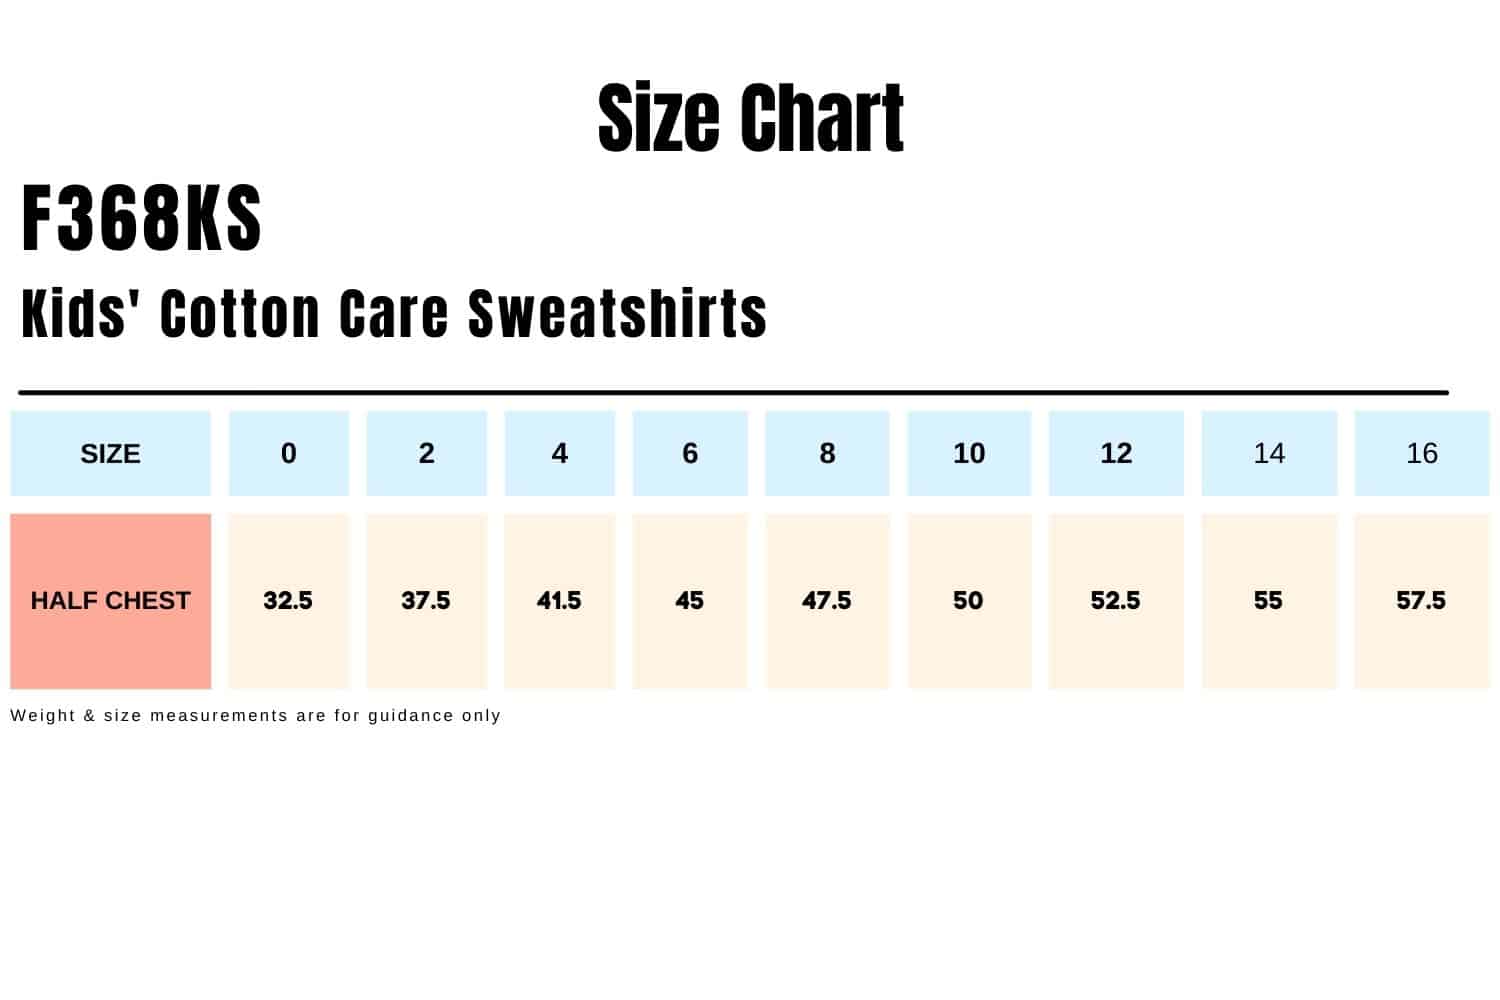 Size-Chart_Kids-Cotton-Care-Sweatshirts-F368KS